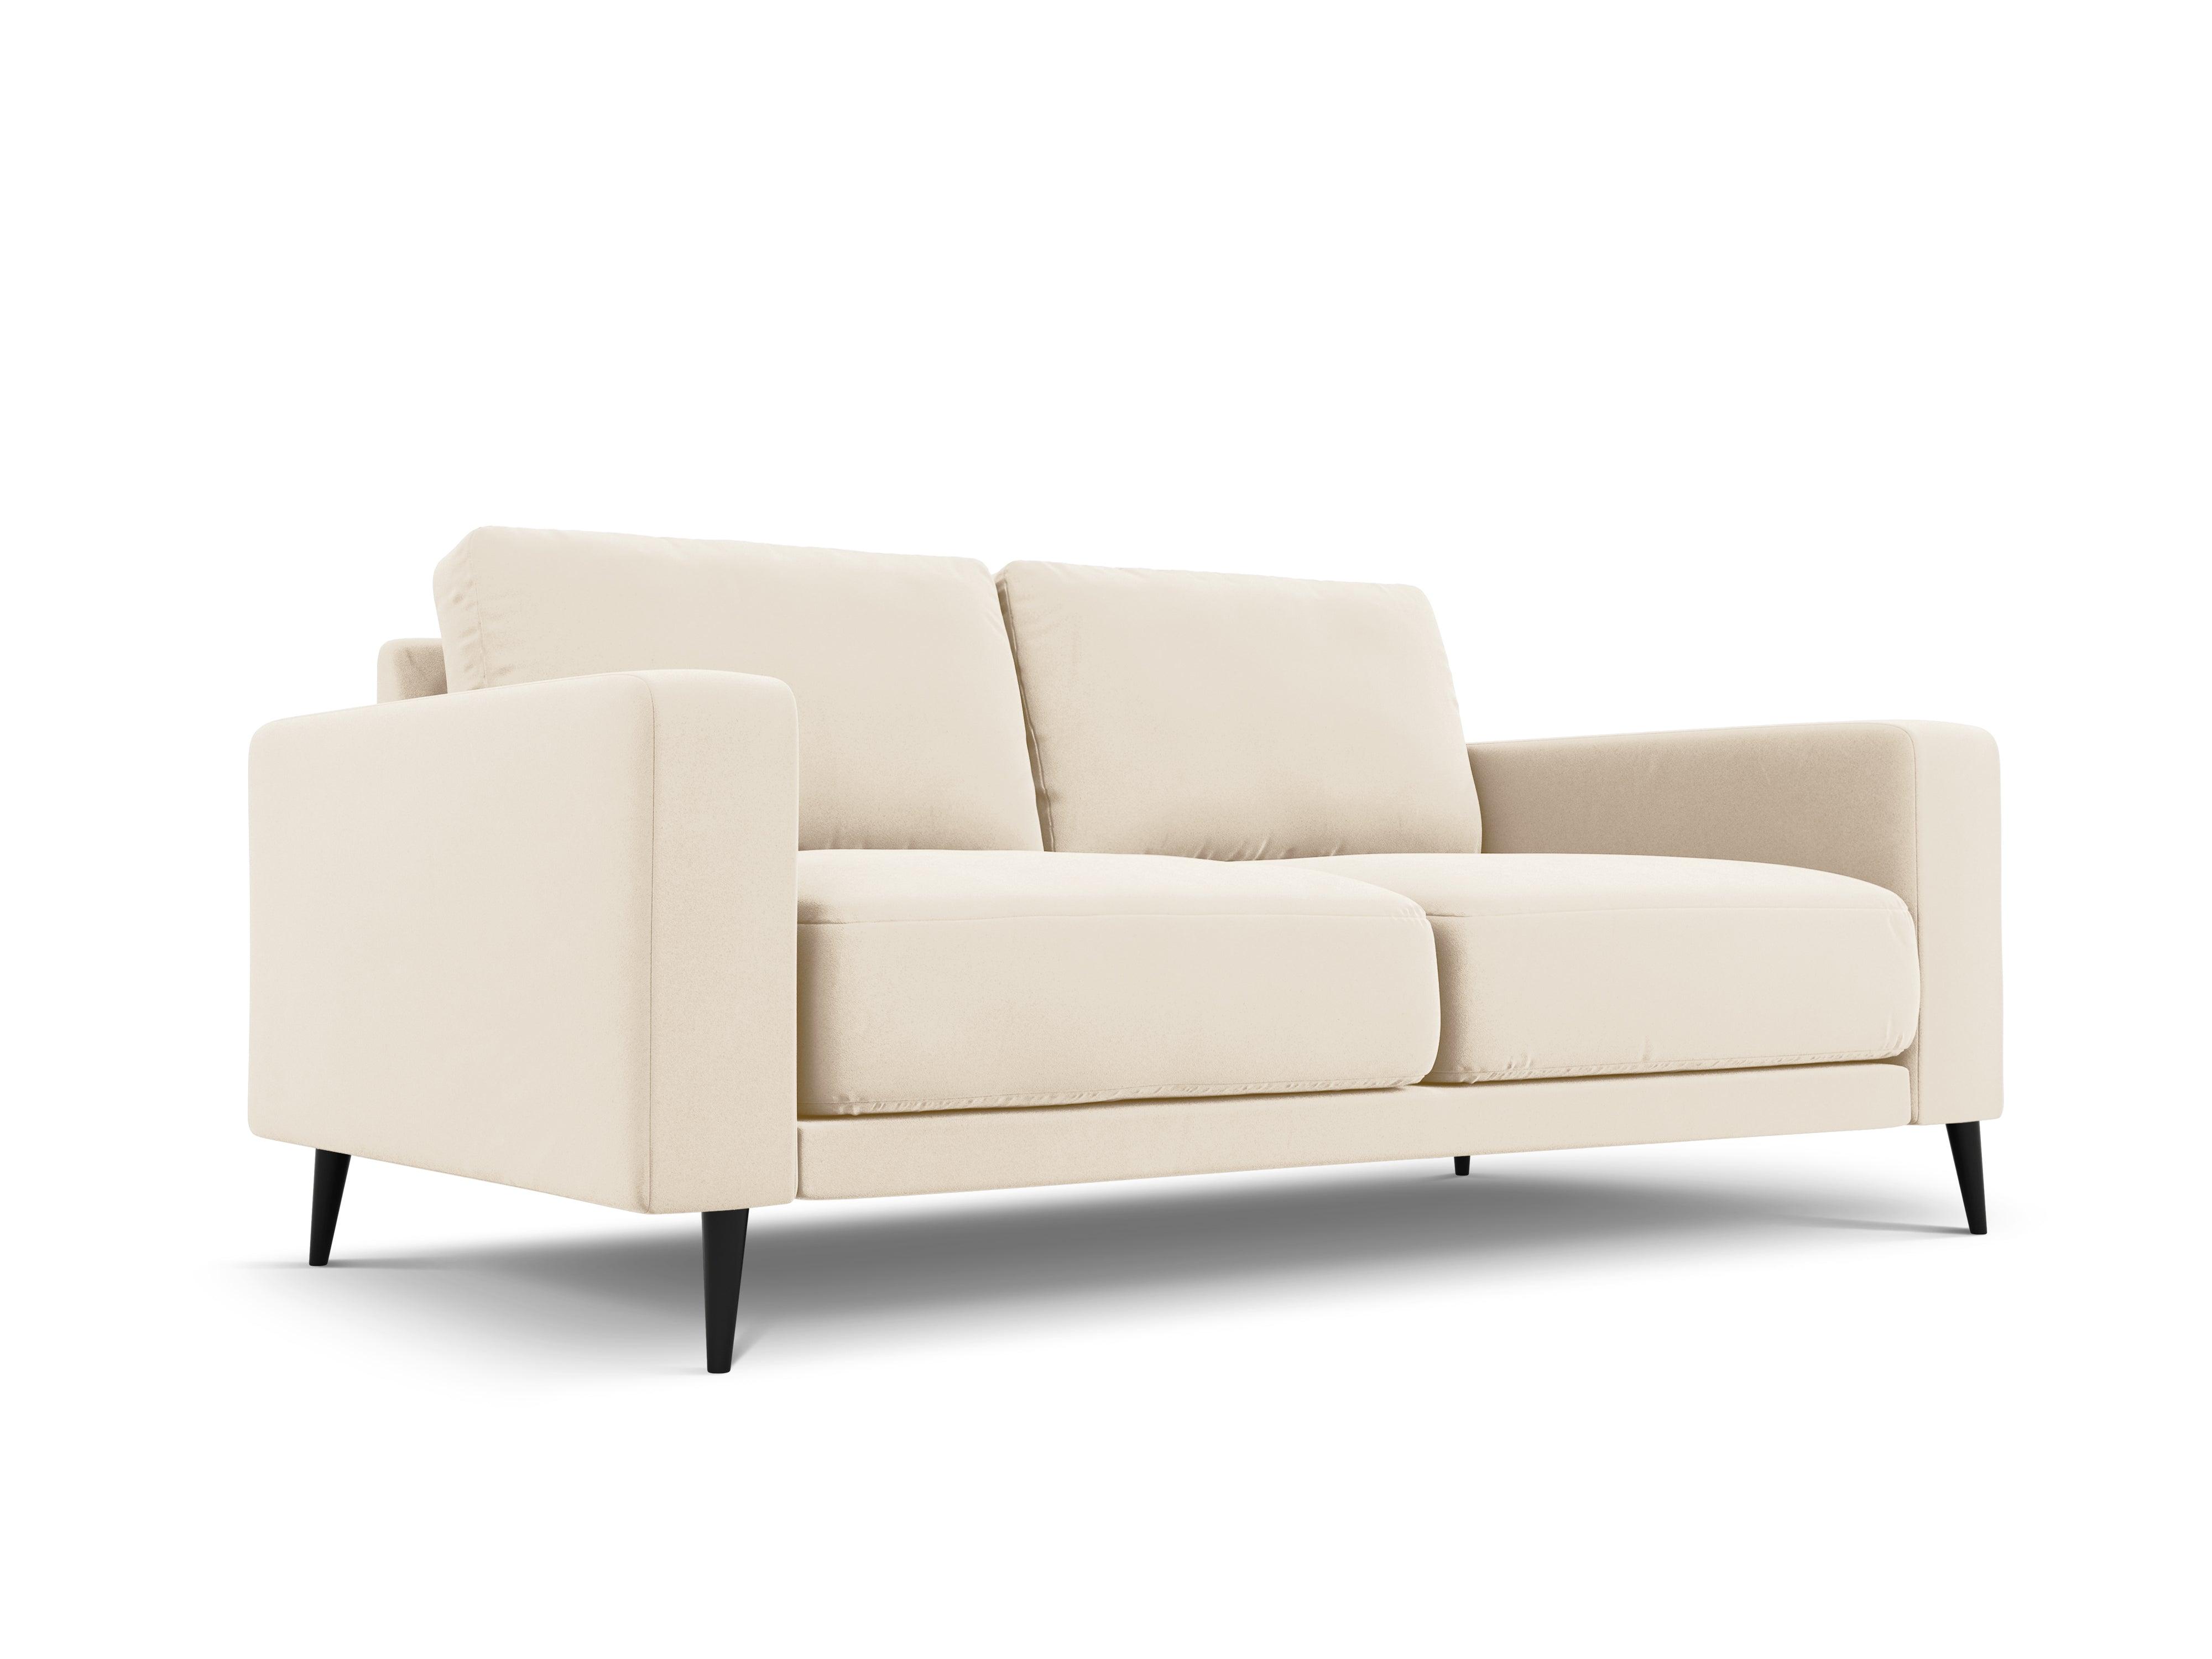 Velvet Sofa, "Kylie", 2 Seats, 163x90x80
Made in Europe, Micadoni, Eye on Design